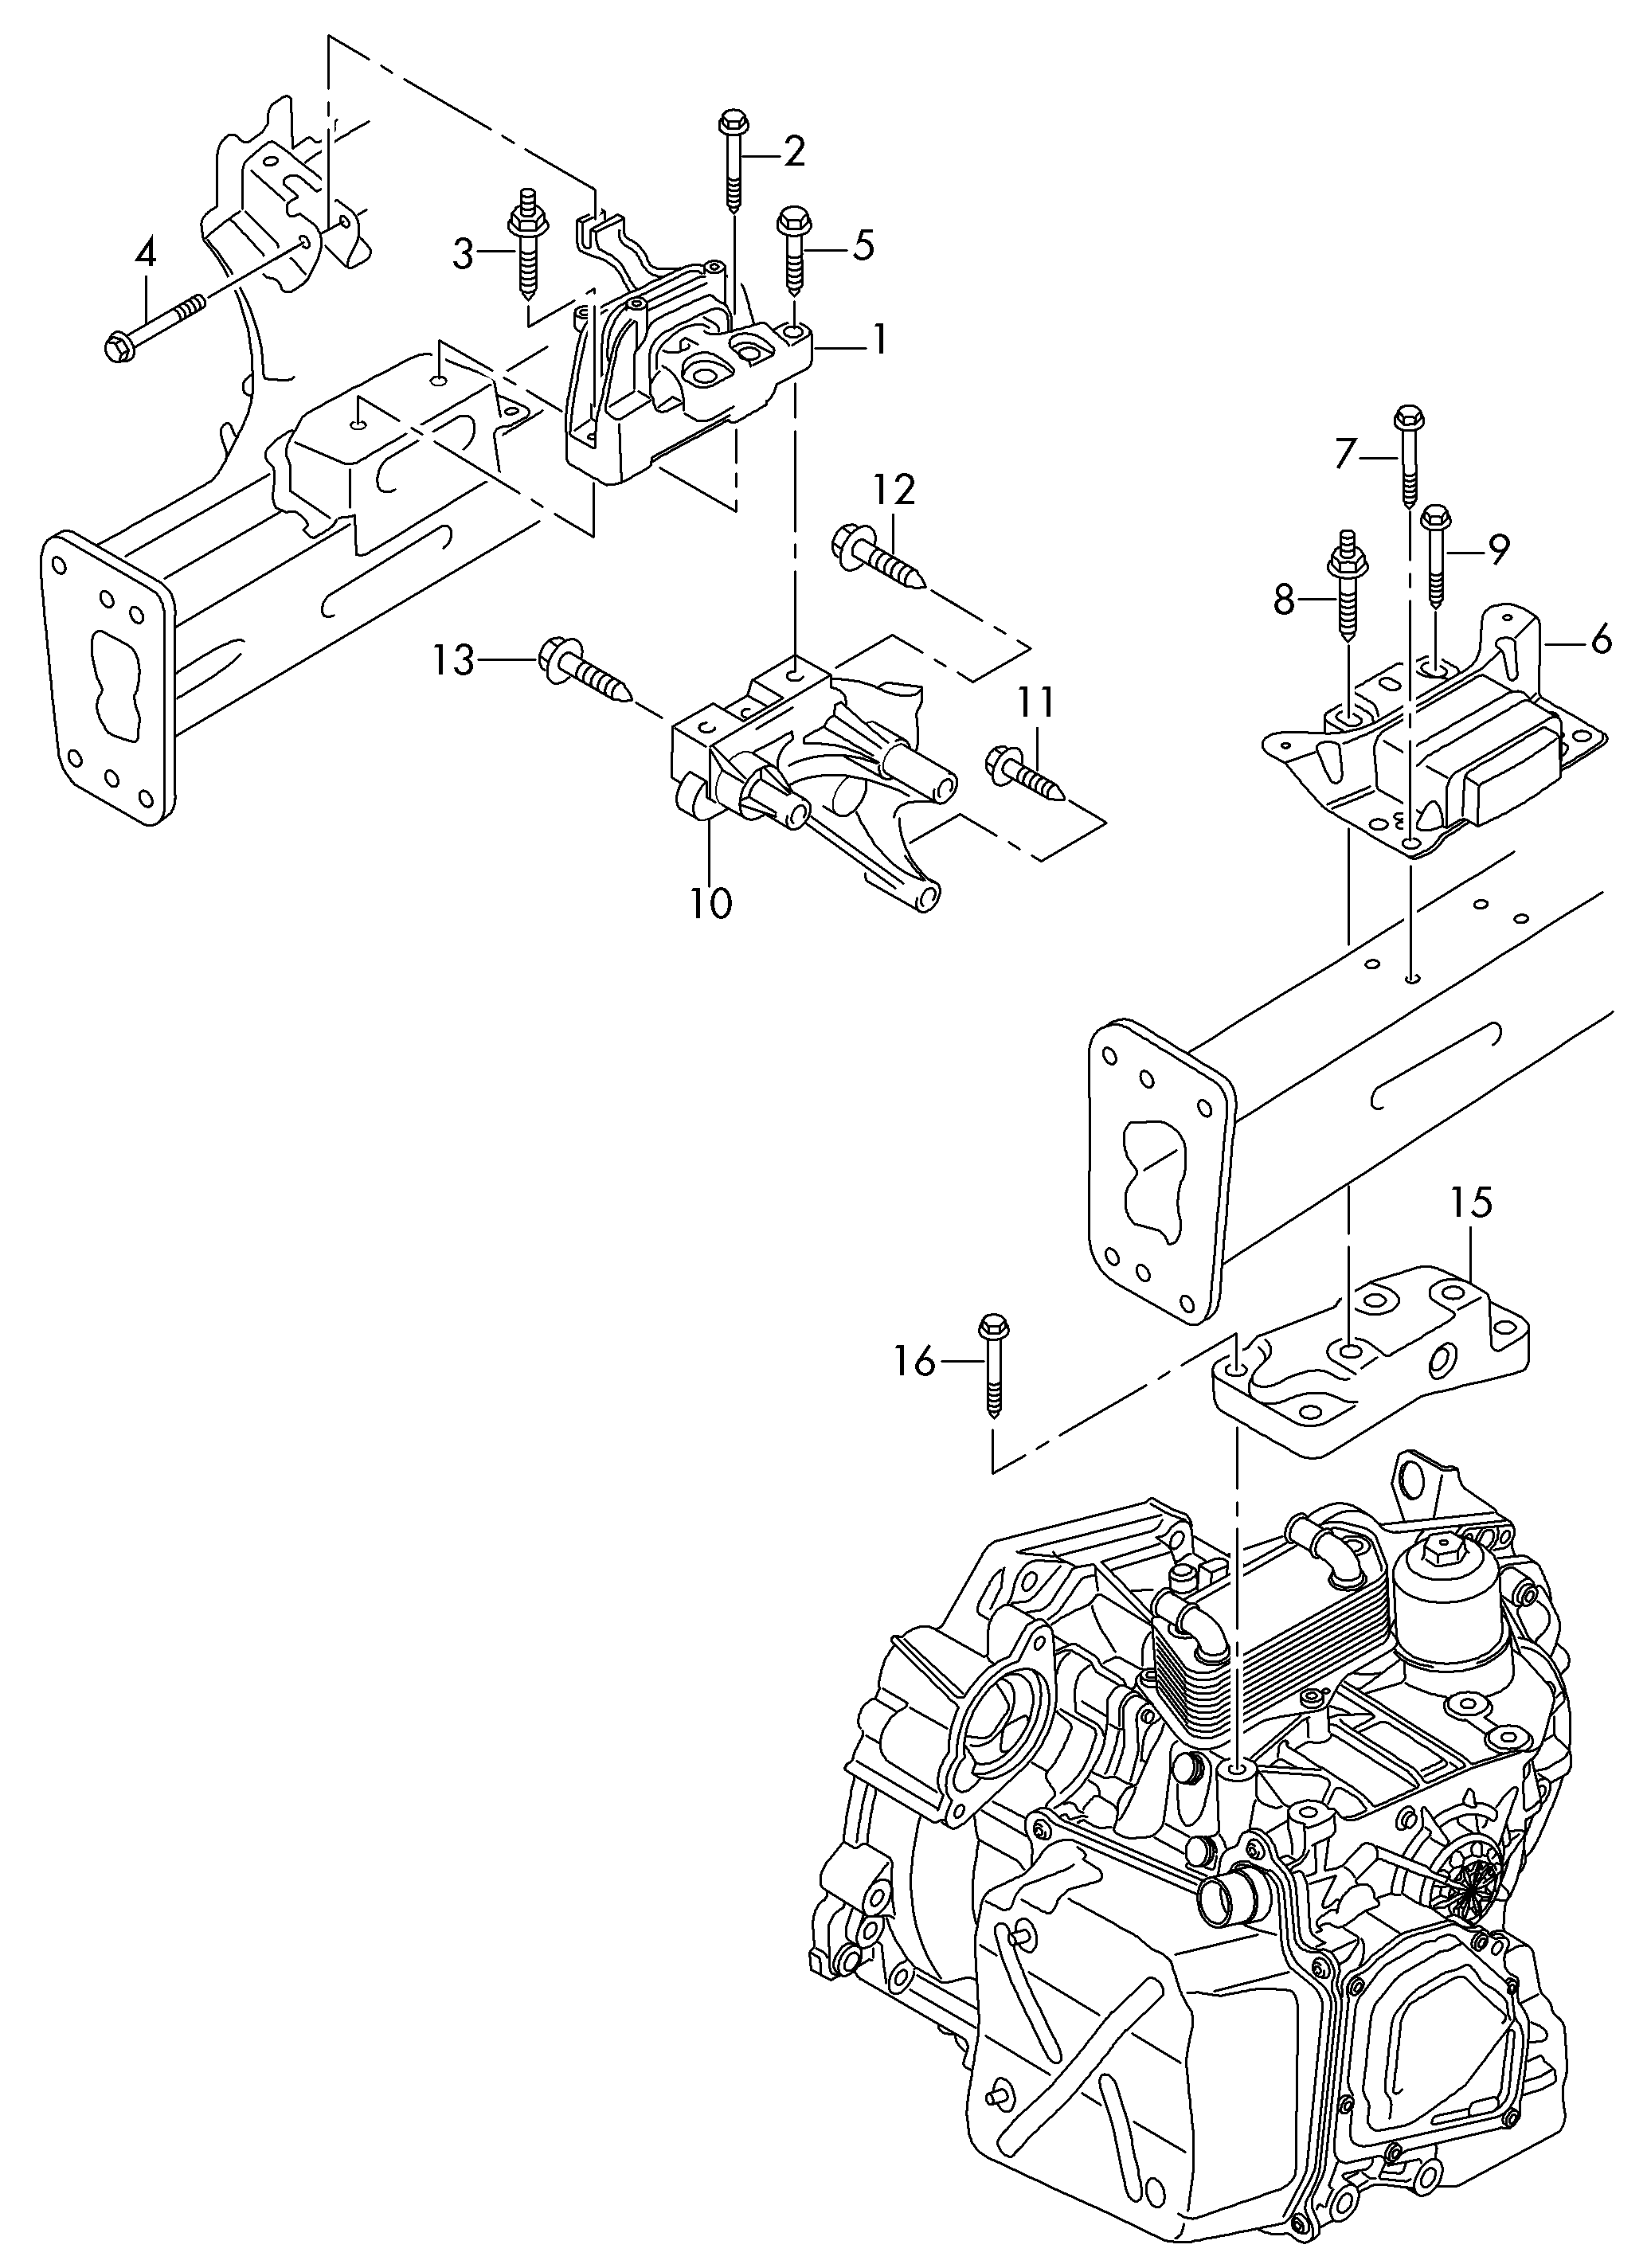 mounting parts for engine and<br>transmission 2.0 Ltr. - Golf/Variant/4Motion - golf